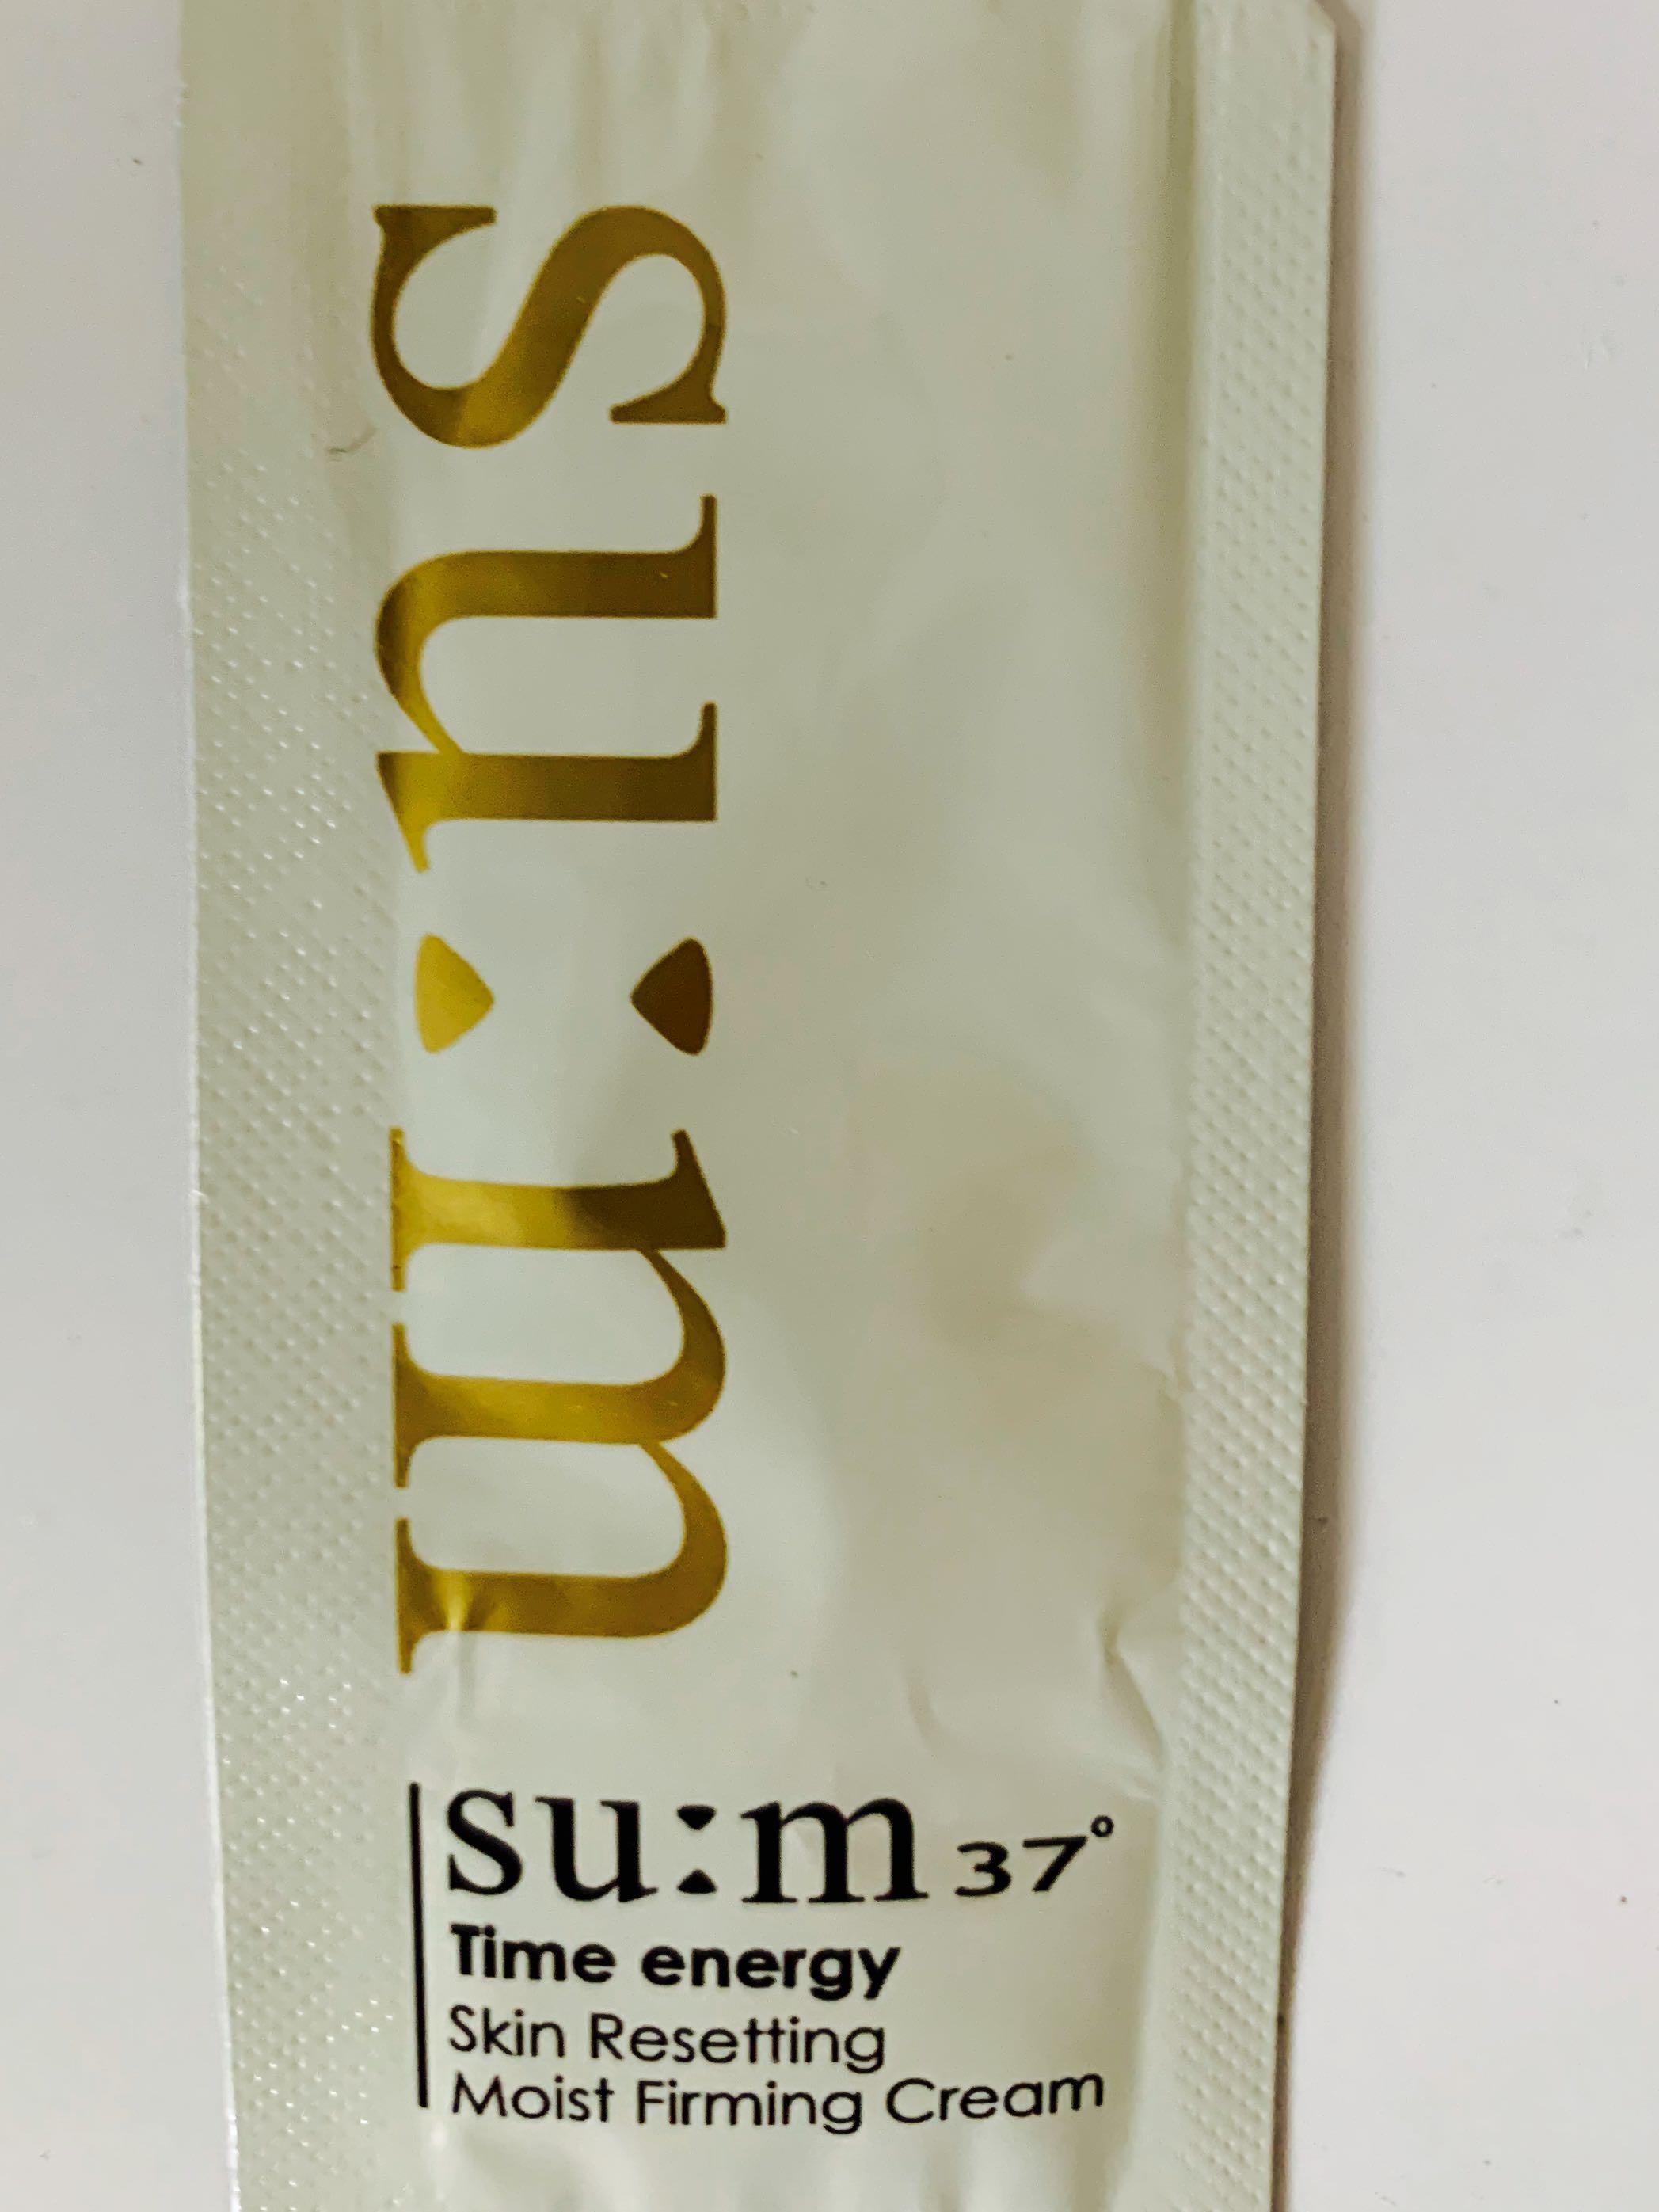 su m37 time energy skin resetting moist firming cream